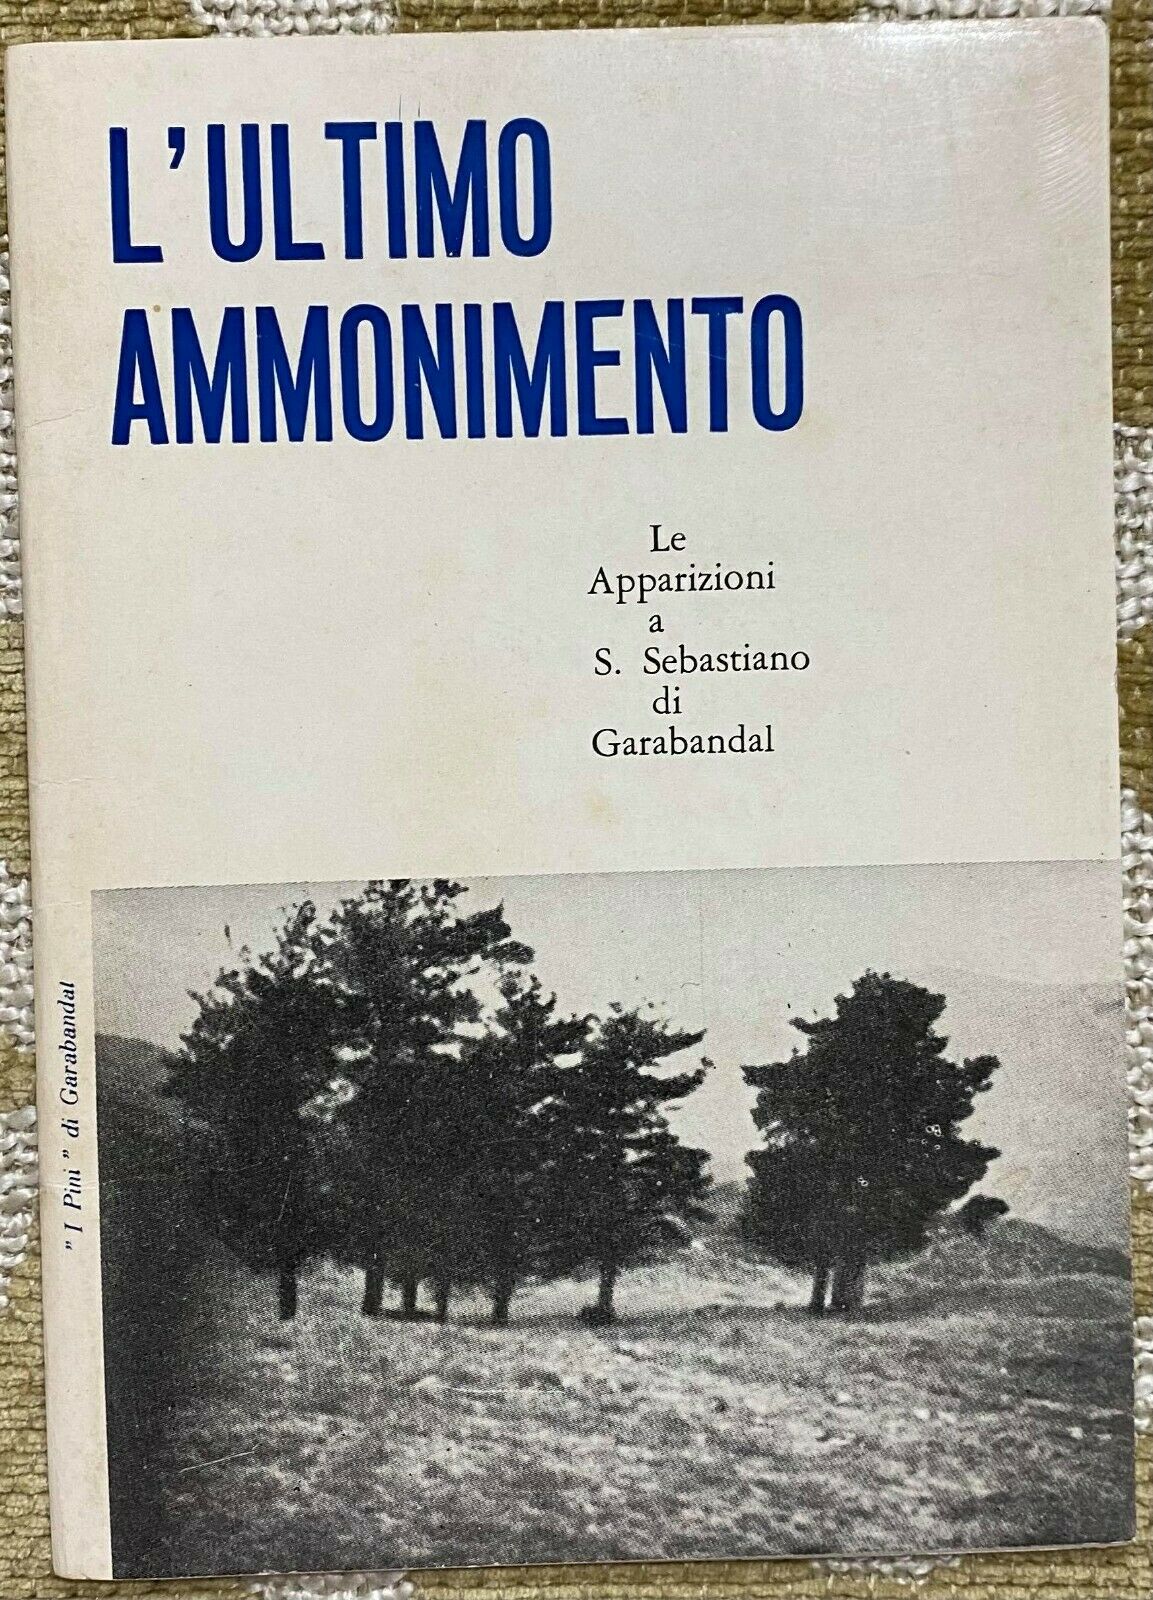 L'ultimo ammonimento - Aa.Vv. - Pisani - 1966 